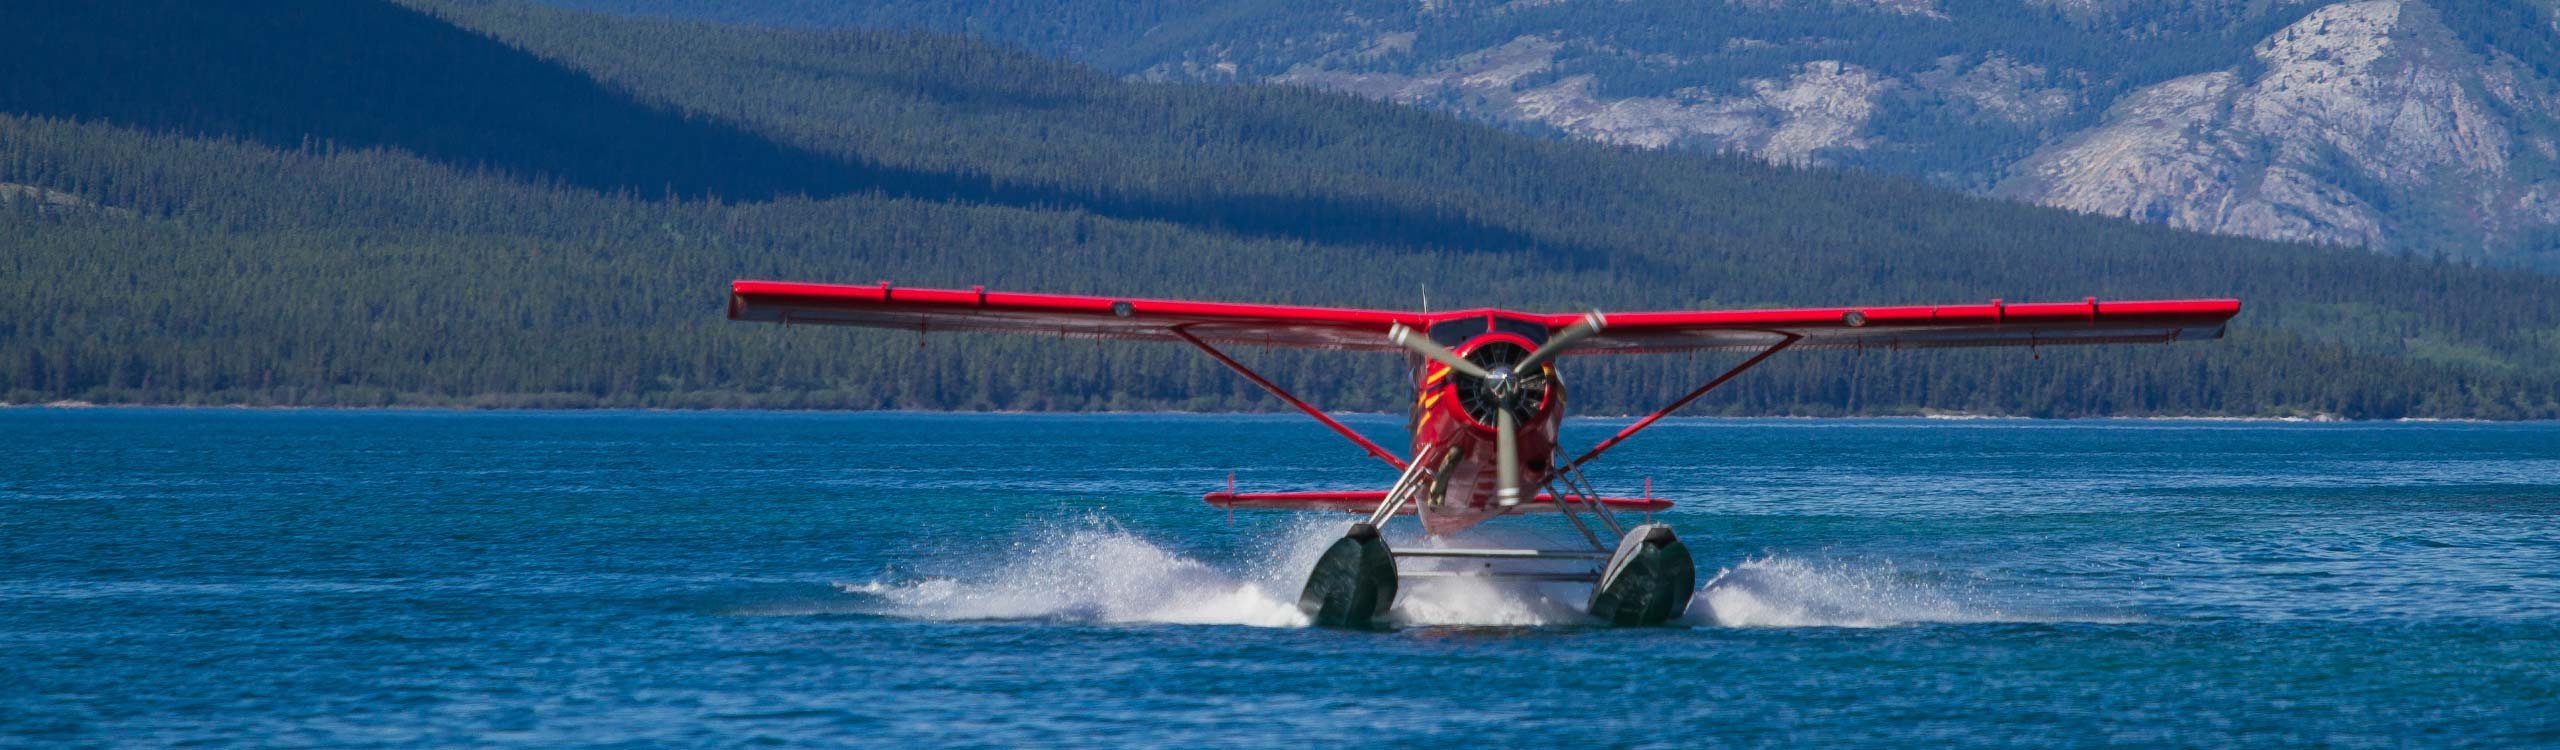 Landing float plane on a lake